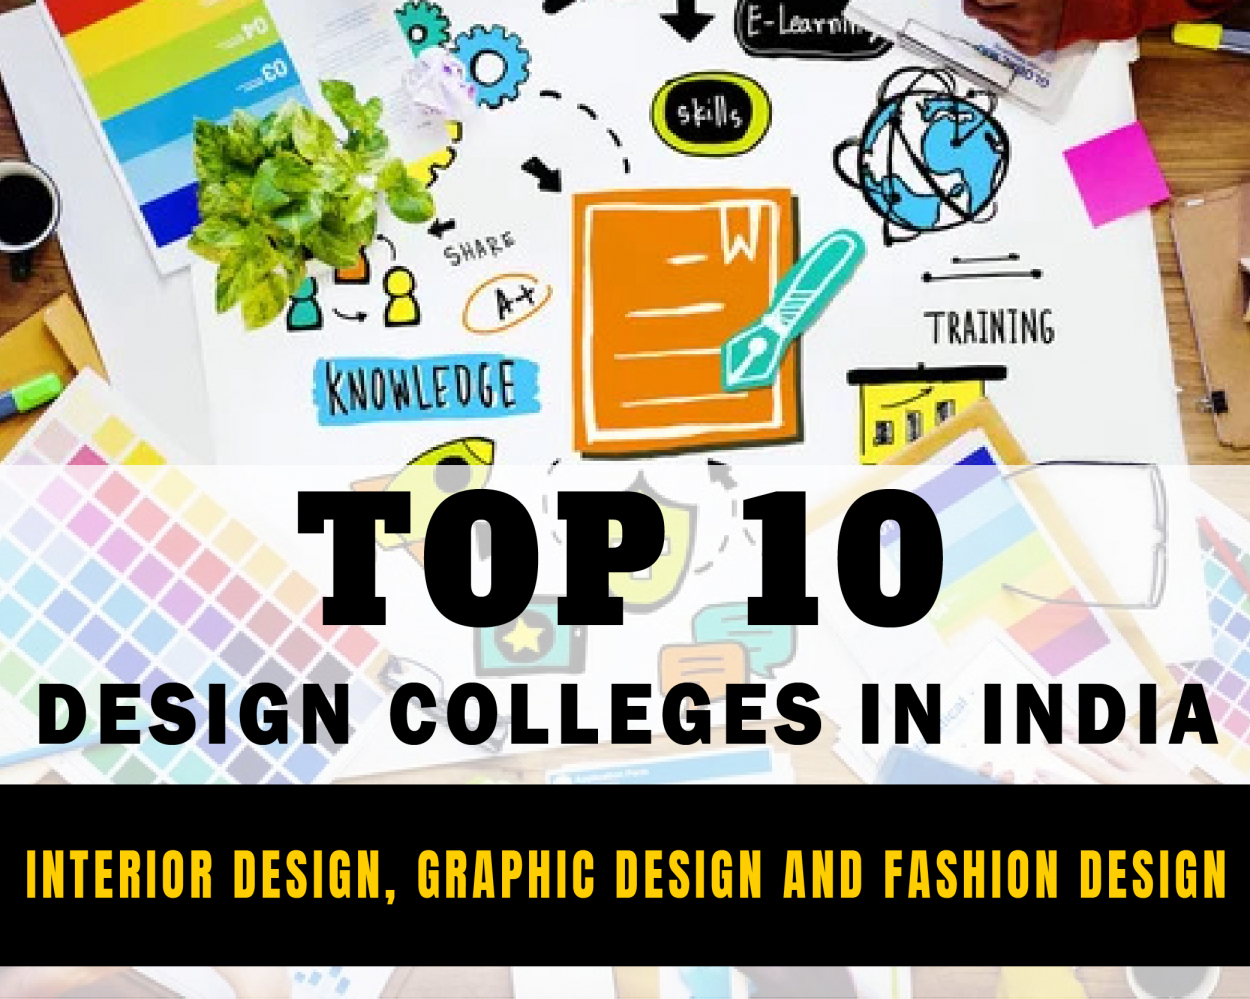 Top 10 Design Colleges in India for Interior Design, Graphic Design and Fashion Design